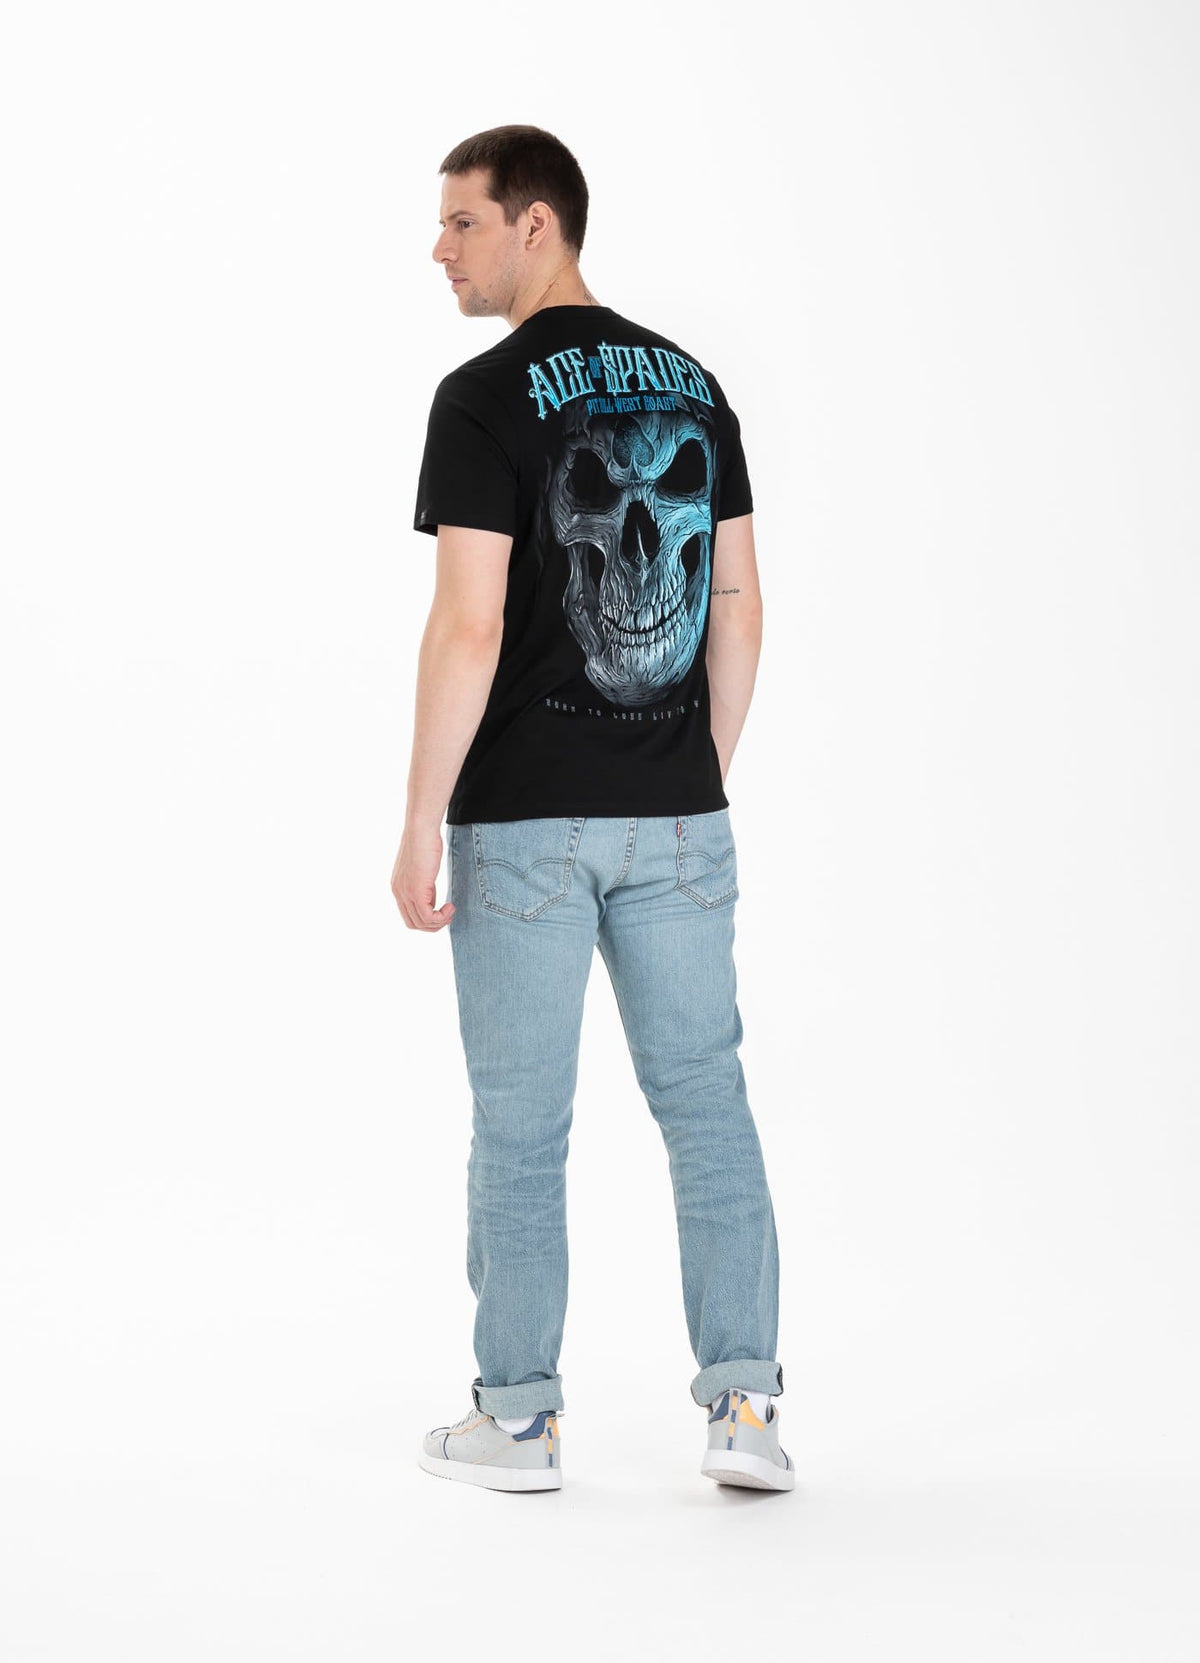 T-Shirt BLUE SKULL Black - Pitbull West Coast International Store 